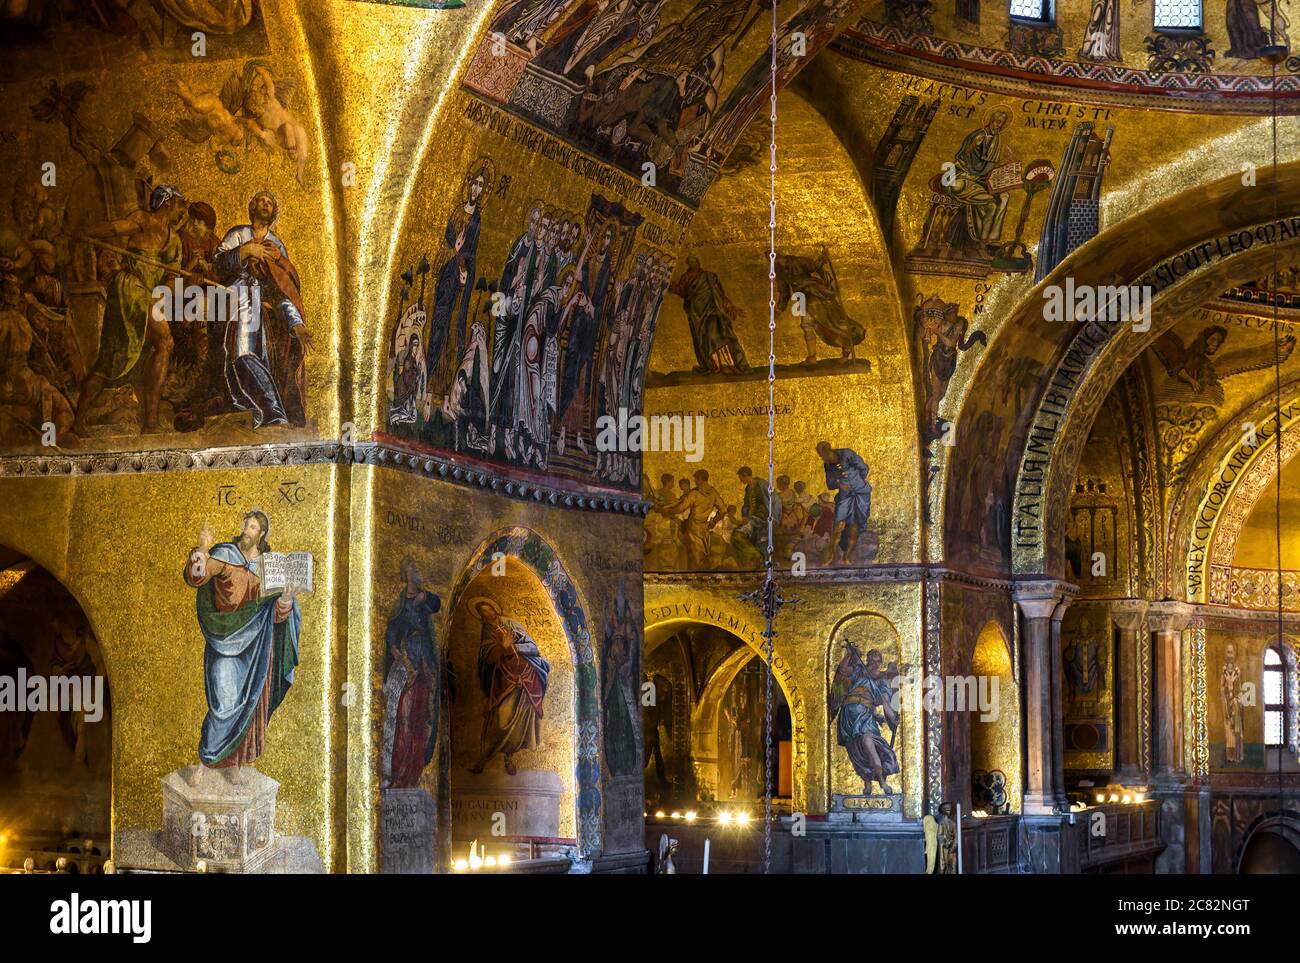 Venedig, Italien - 21. Mai 2017: Goldenes Wandmosaik im Inneren des Markusdom oder Markusbasilika,`s ist ein altes Wahrzeichen Venedigs. Innenraum des berühmten Markusdom`s ca. Stockfoto